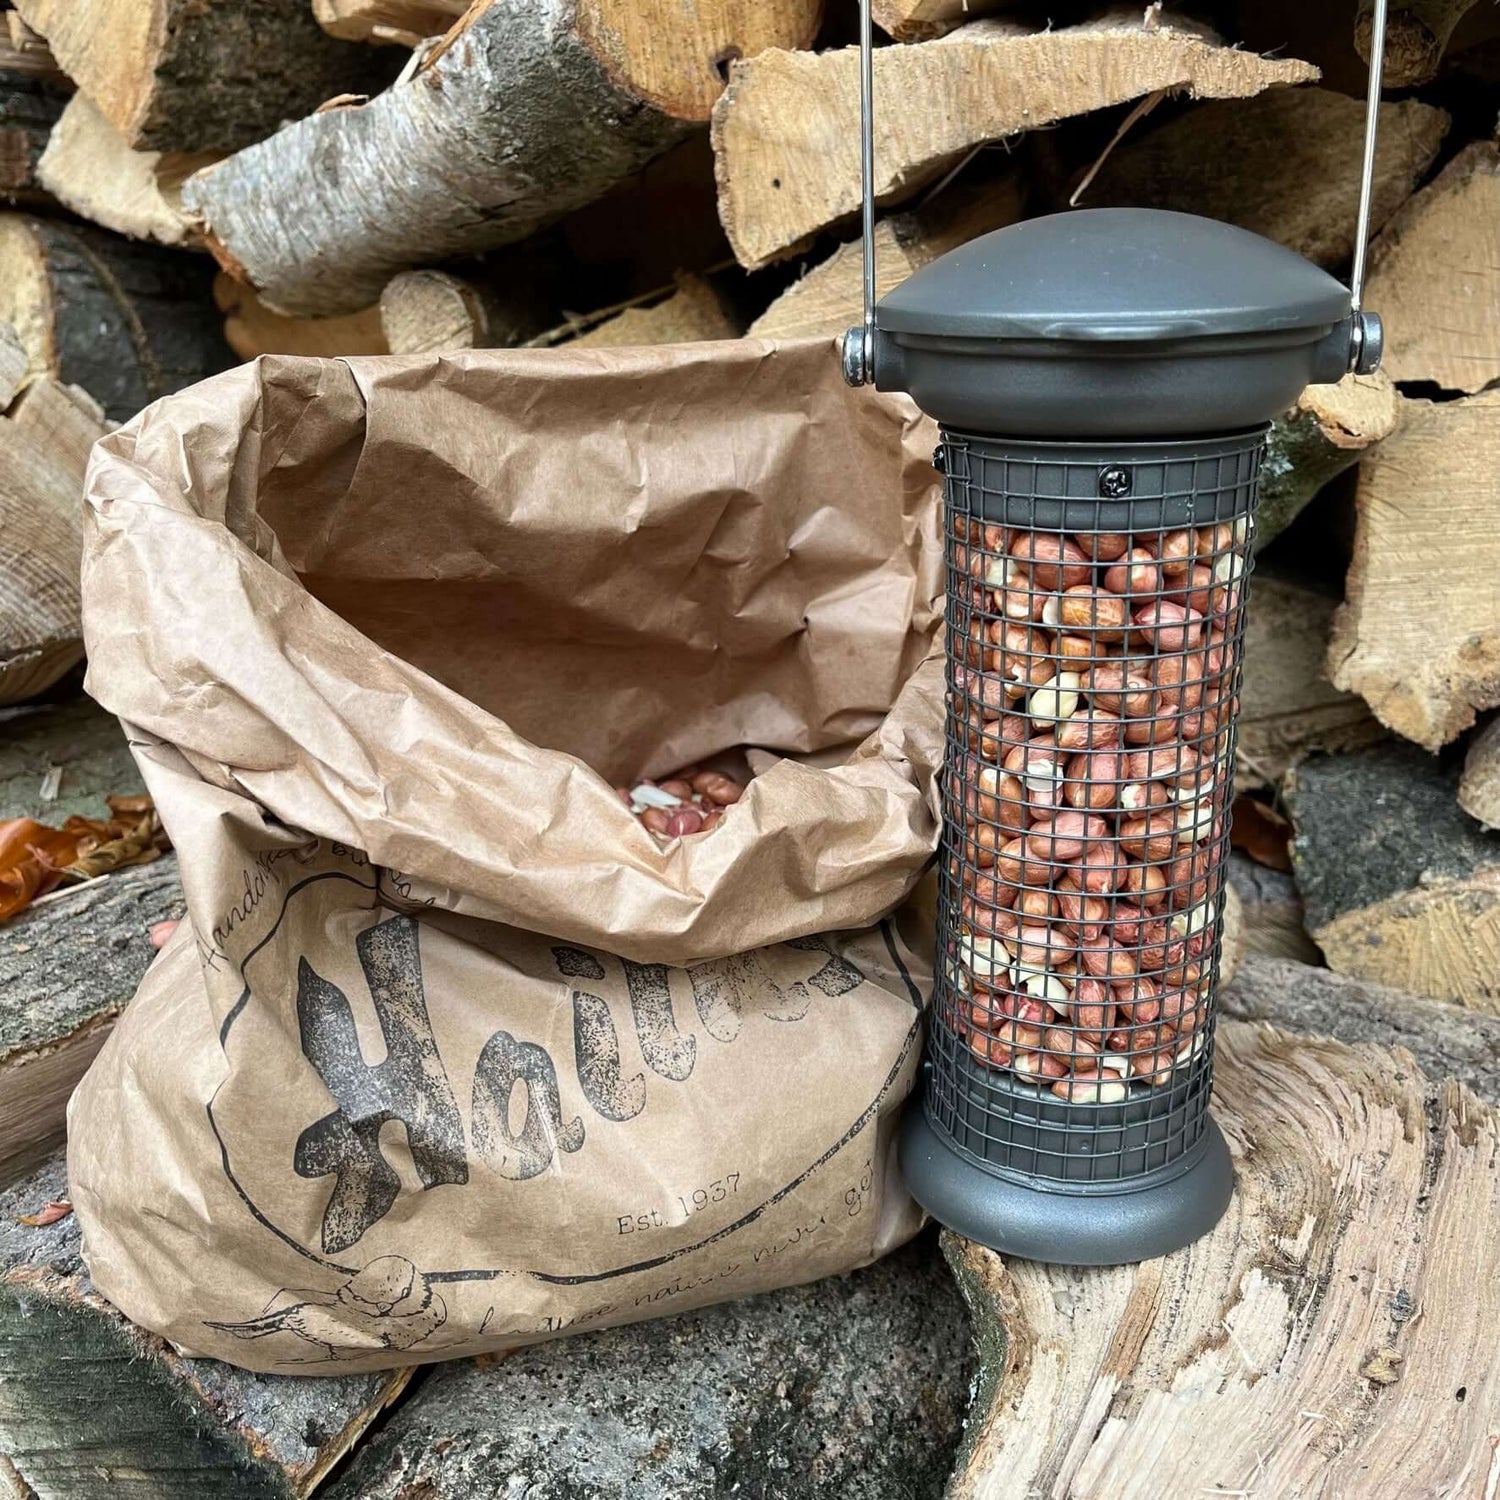 A bag of Haith's Premium peanuts and a metal flick and click peanut feeder 